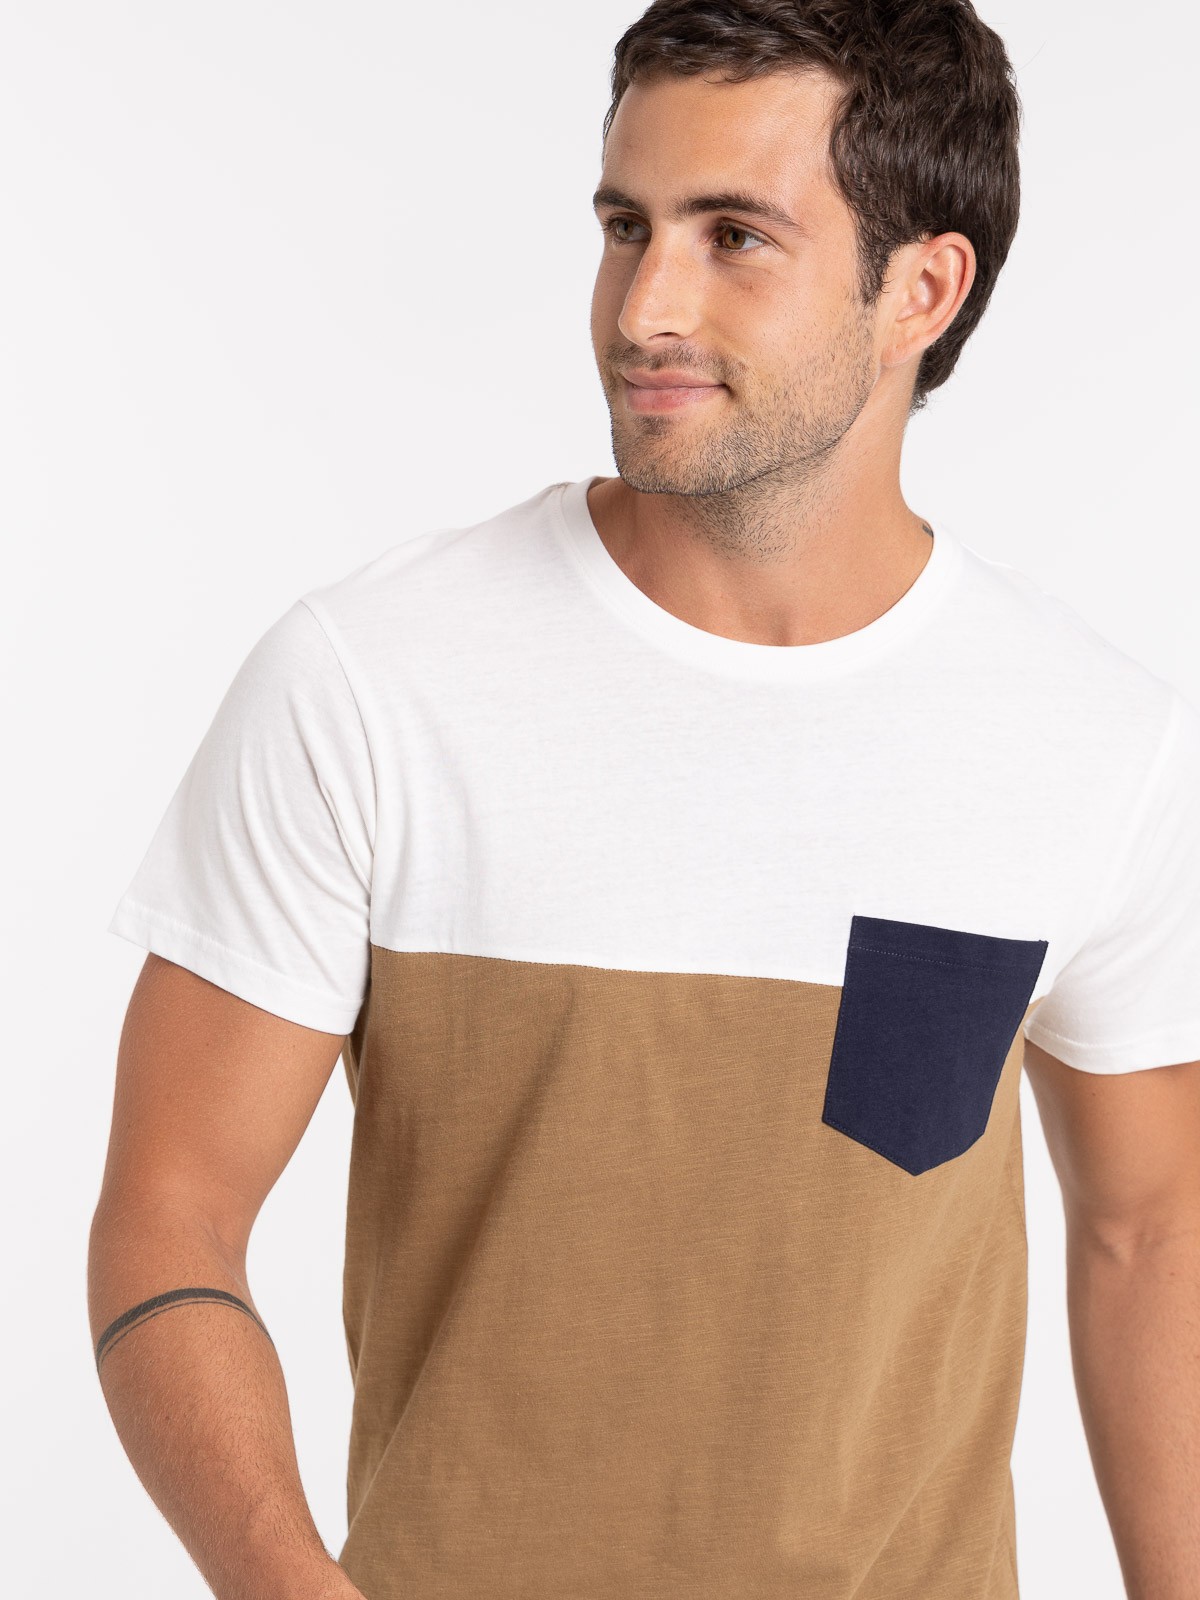 Tee-shirt avec Poche Poitrine Gauche - Bleu en coton Blend - T-shirt / Polo  Homme sur MenCorner